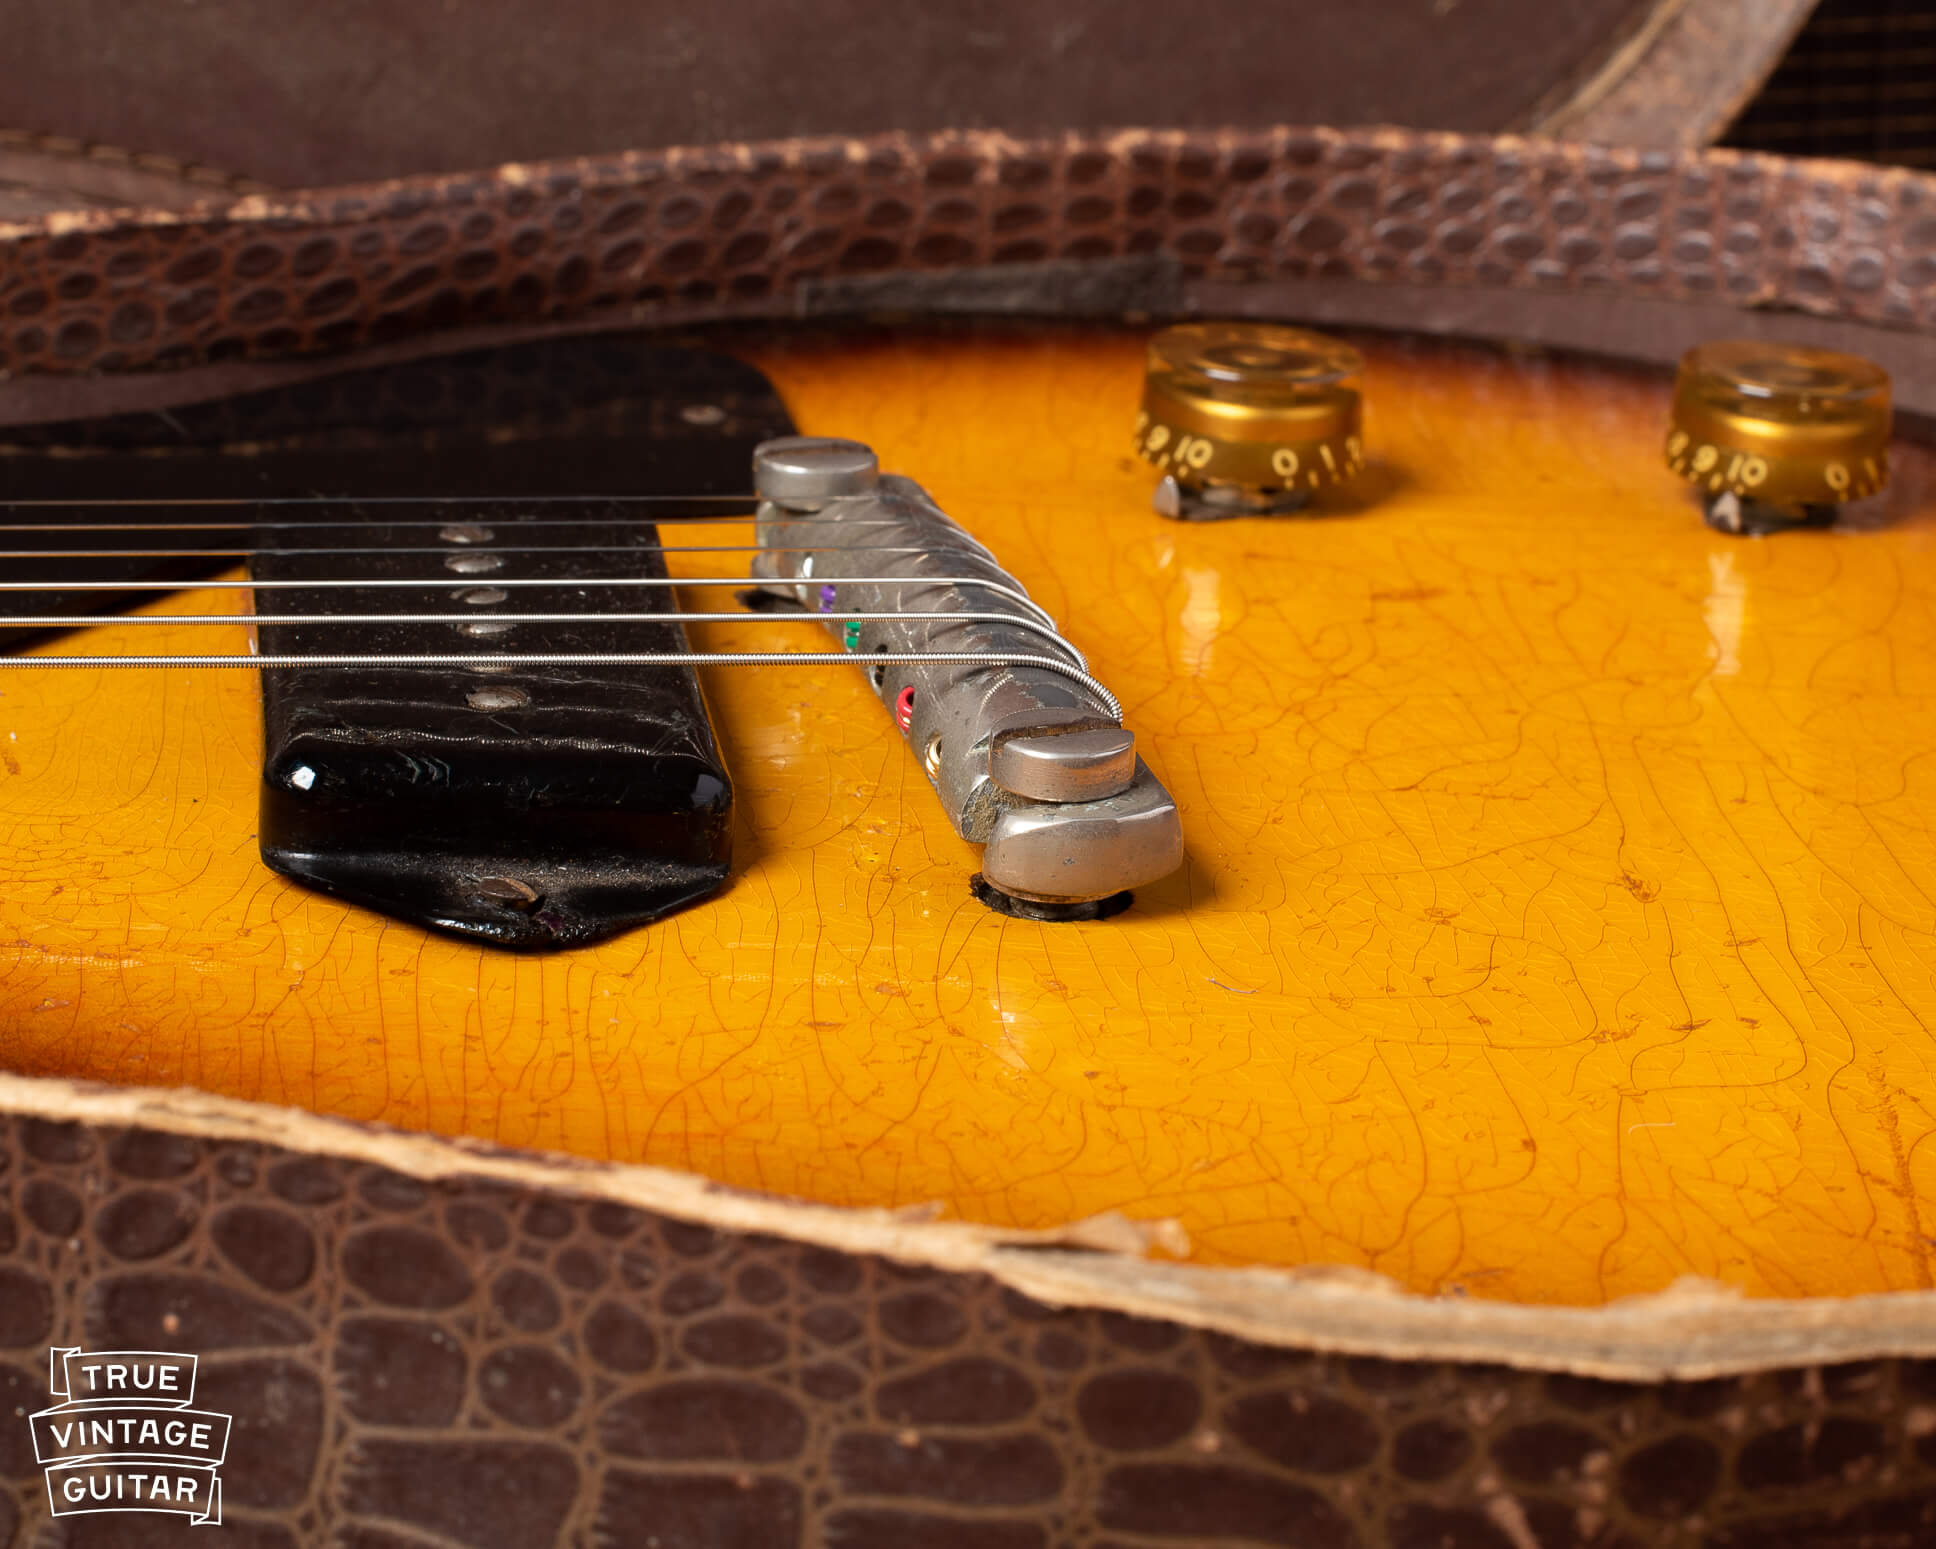 Mid 1950s Gibson Les Paul Jr with wrap tail bridge